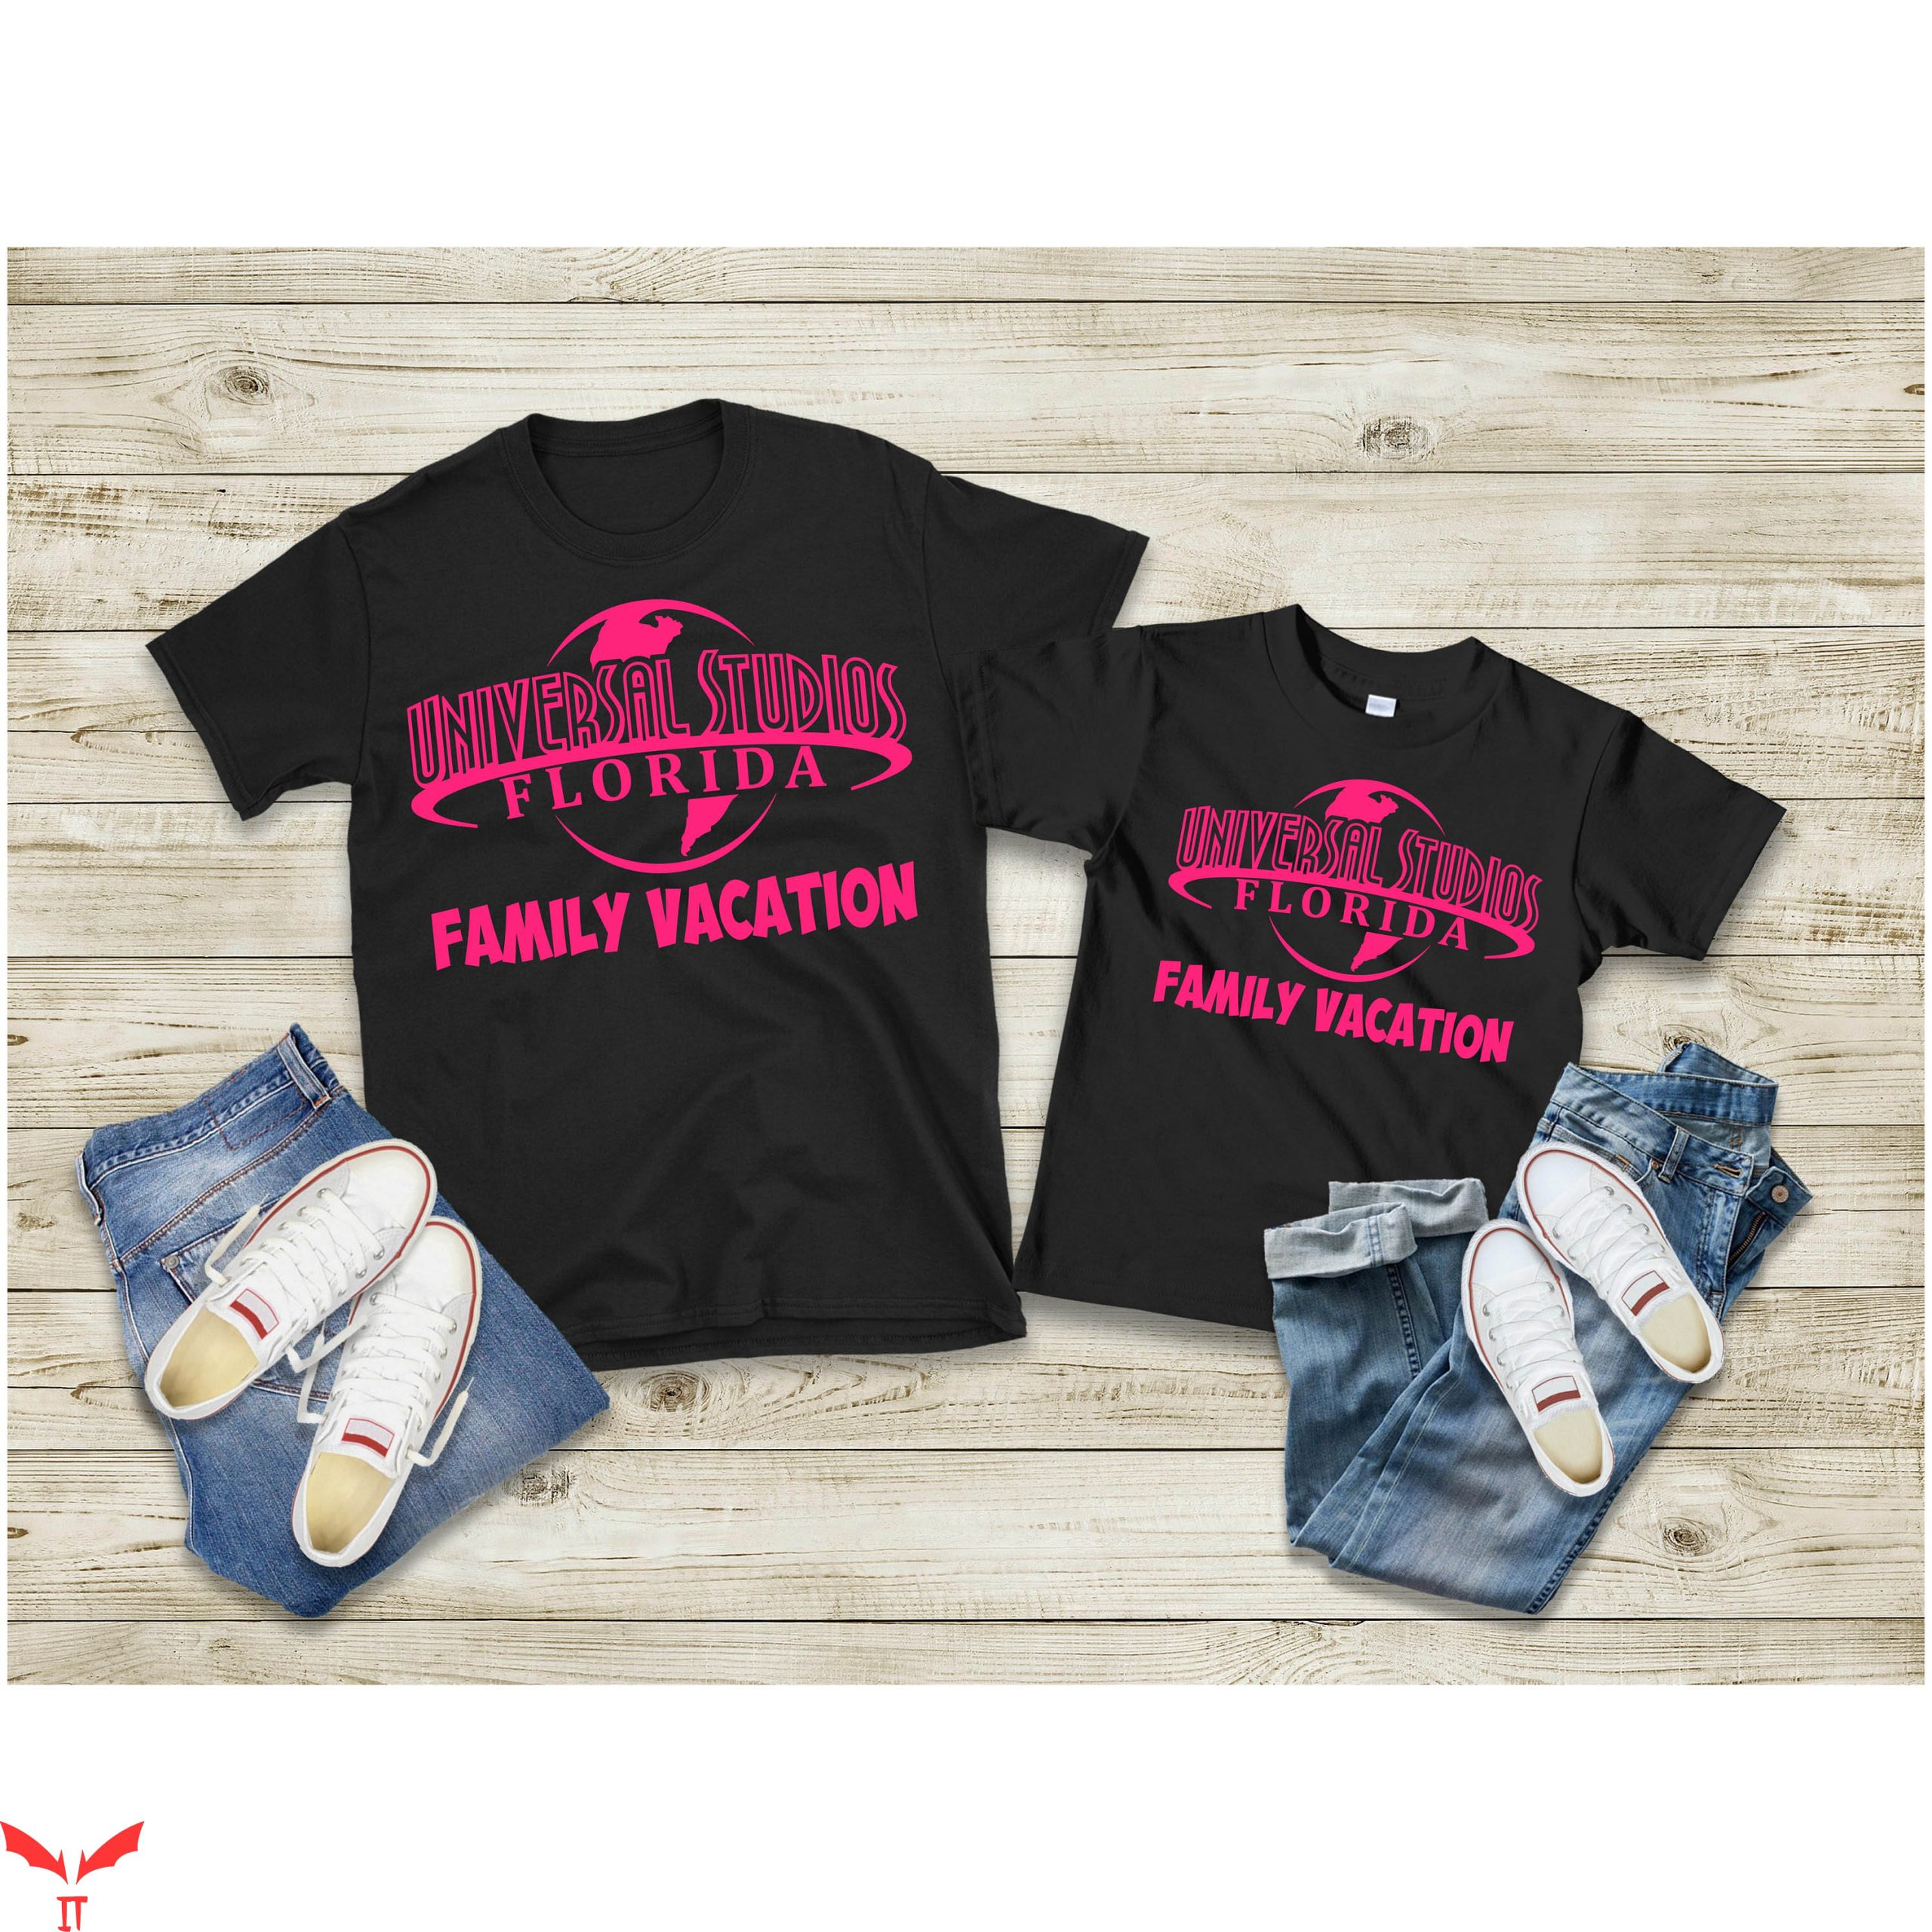 Universal Studios Family T-Shirt Orlando Florida Vacation